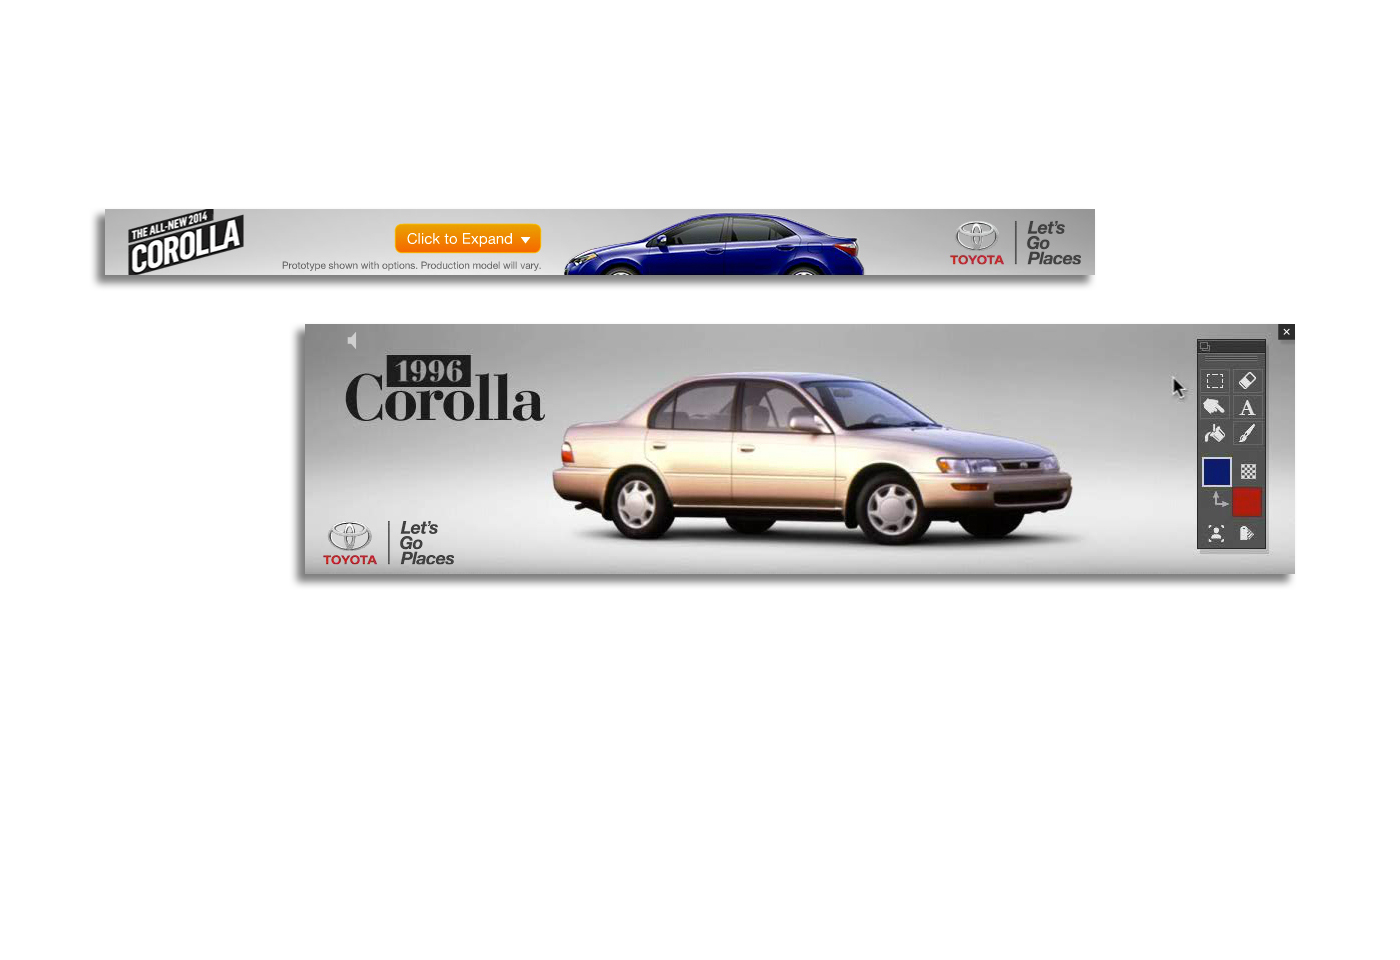 Toyota Corolla Pre-Expandable